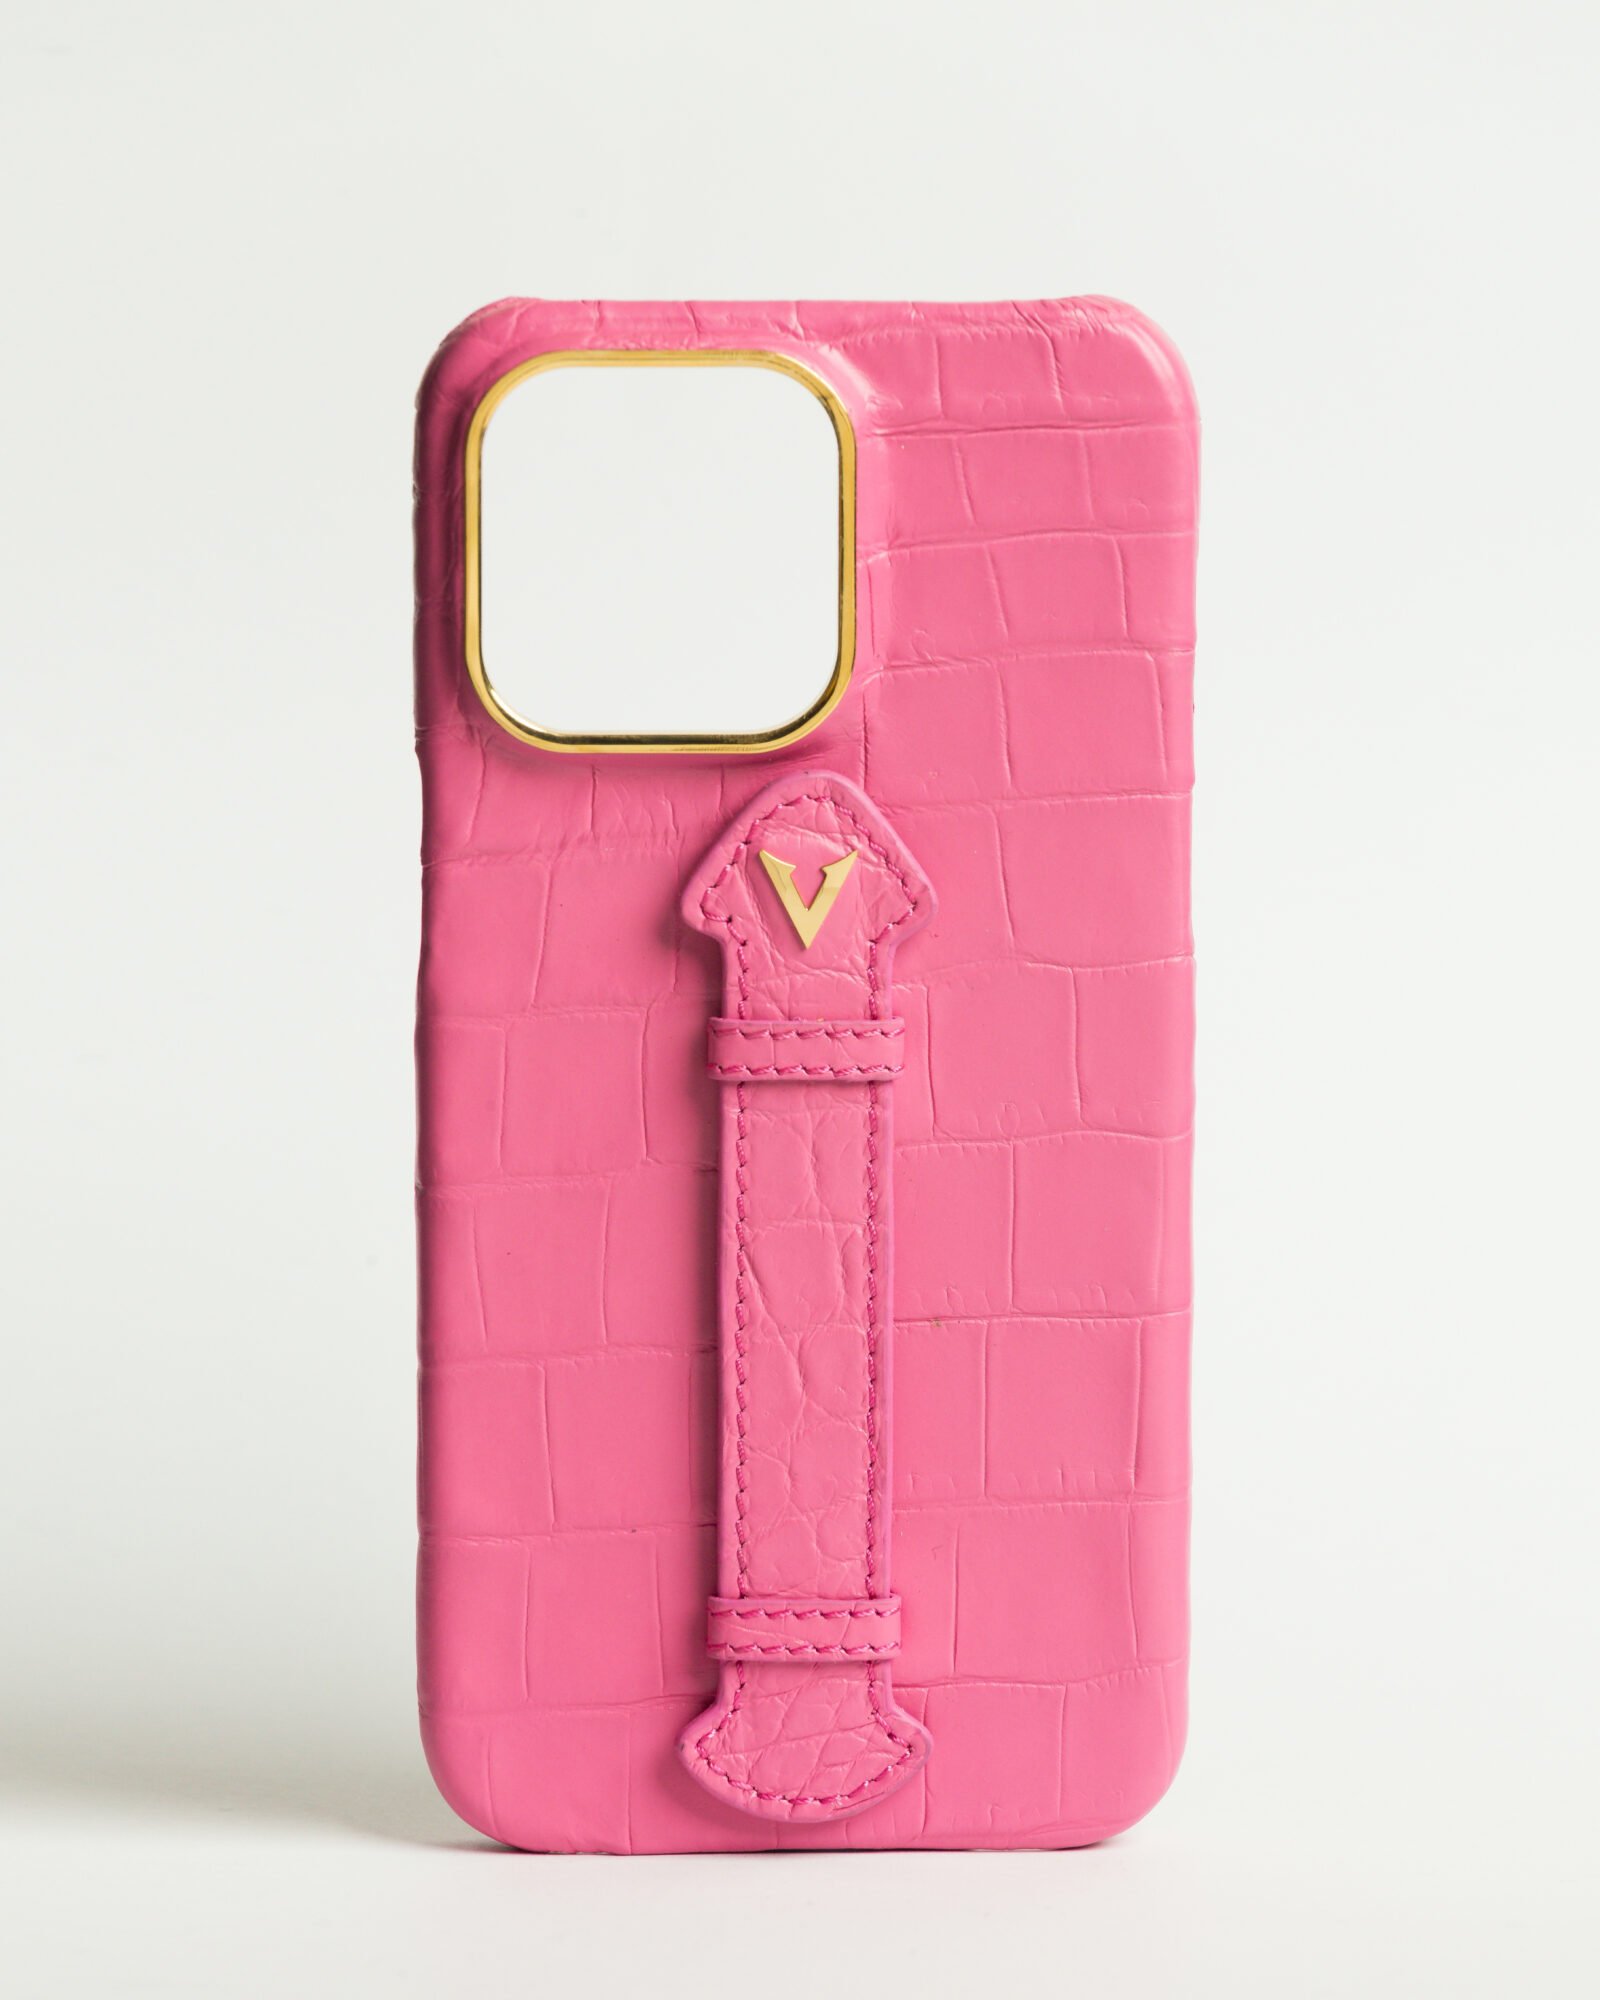 Luxury Pink Crocodile leather Iphone case